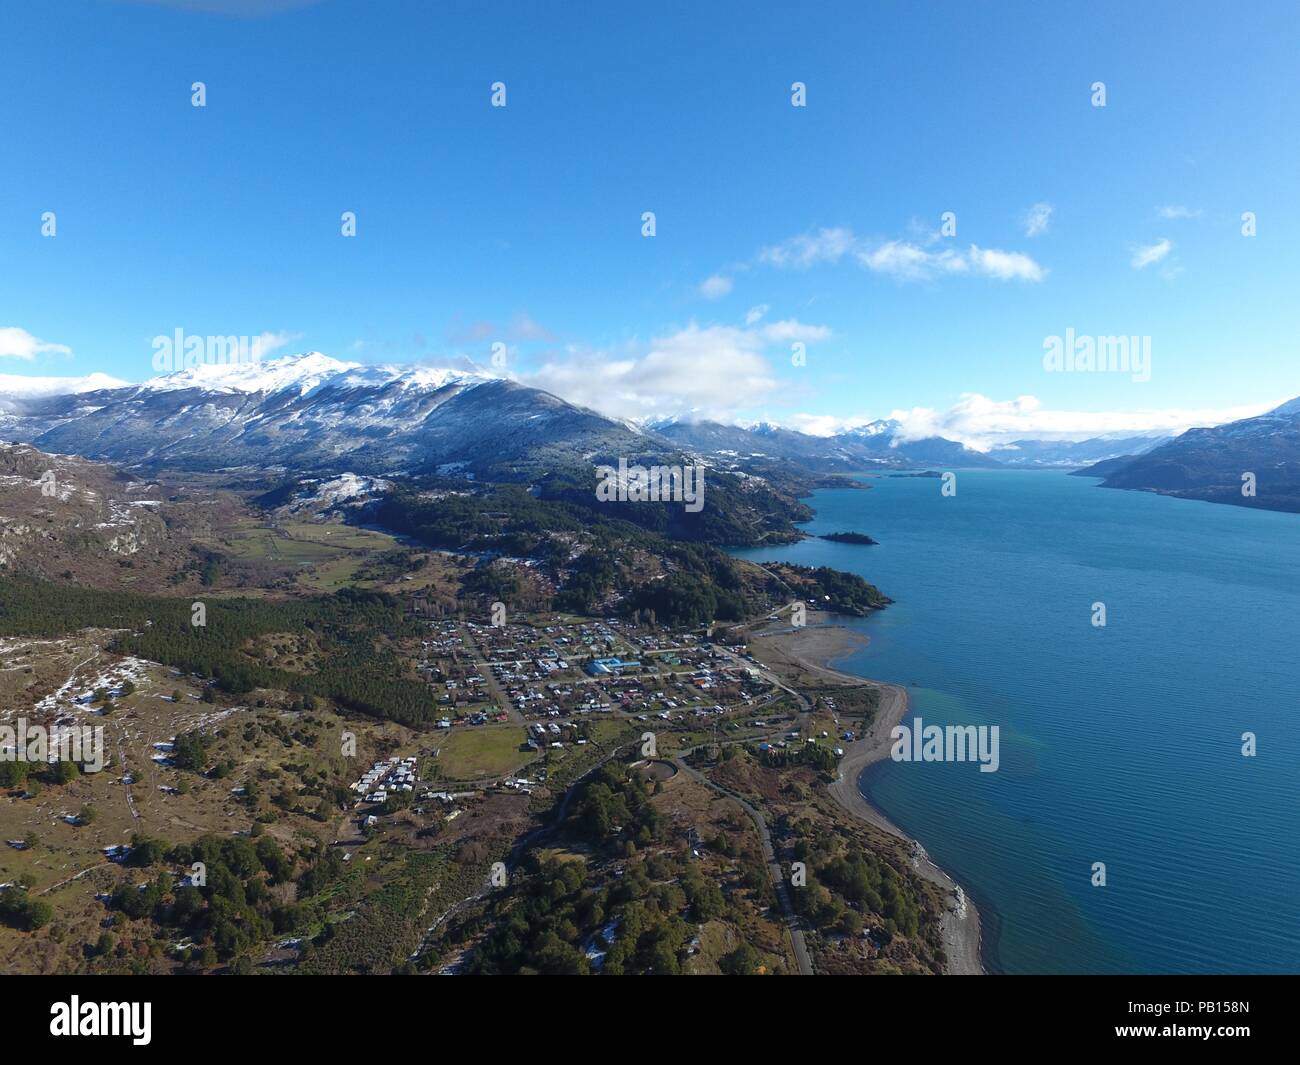 Puerto Rio Tranquilo, Carretera Austral, Patagonia, Chile Stock Photo